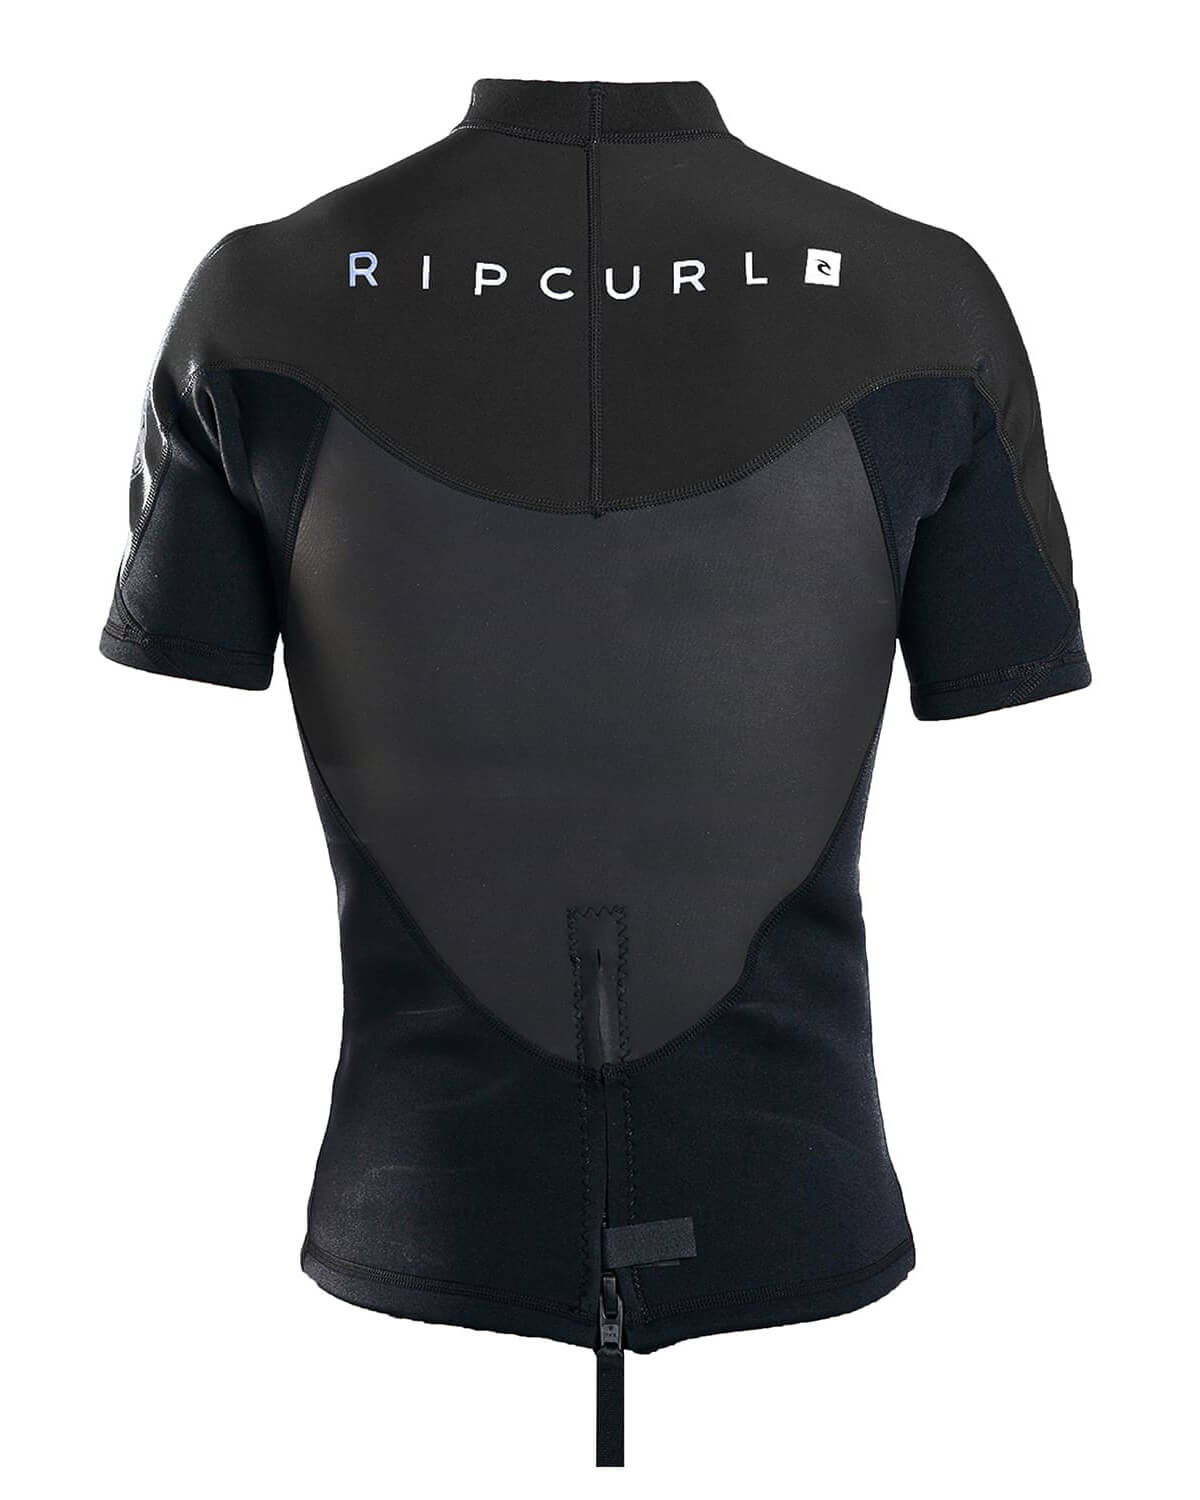 1.5mm Men's Rip Curl OMEGA S/S Wetsuit Jacket - Sale